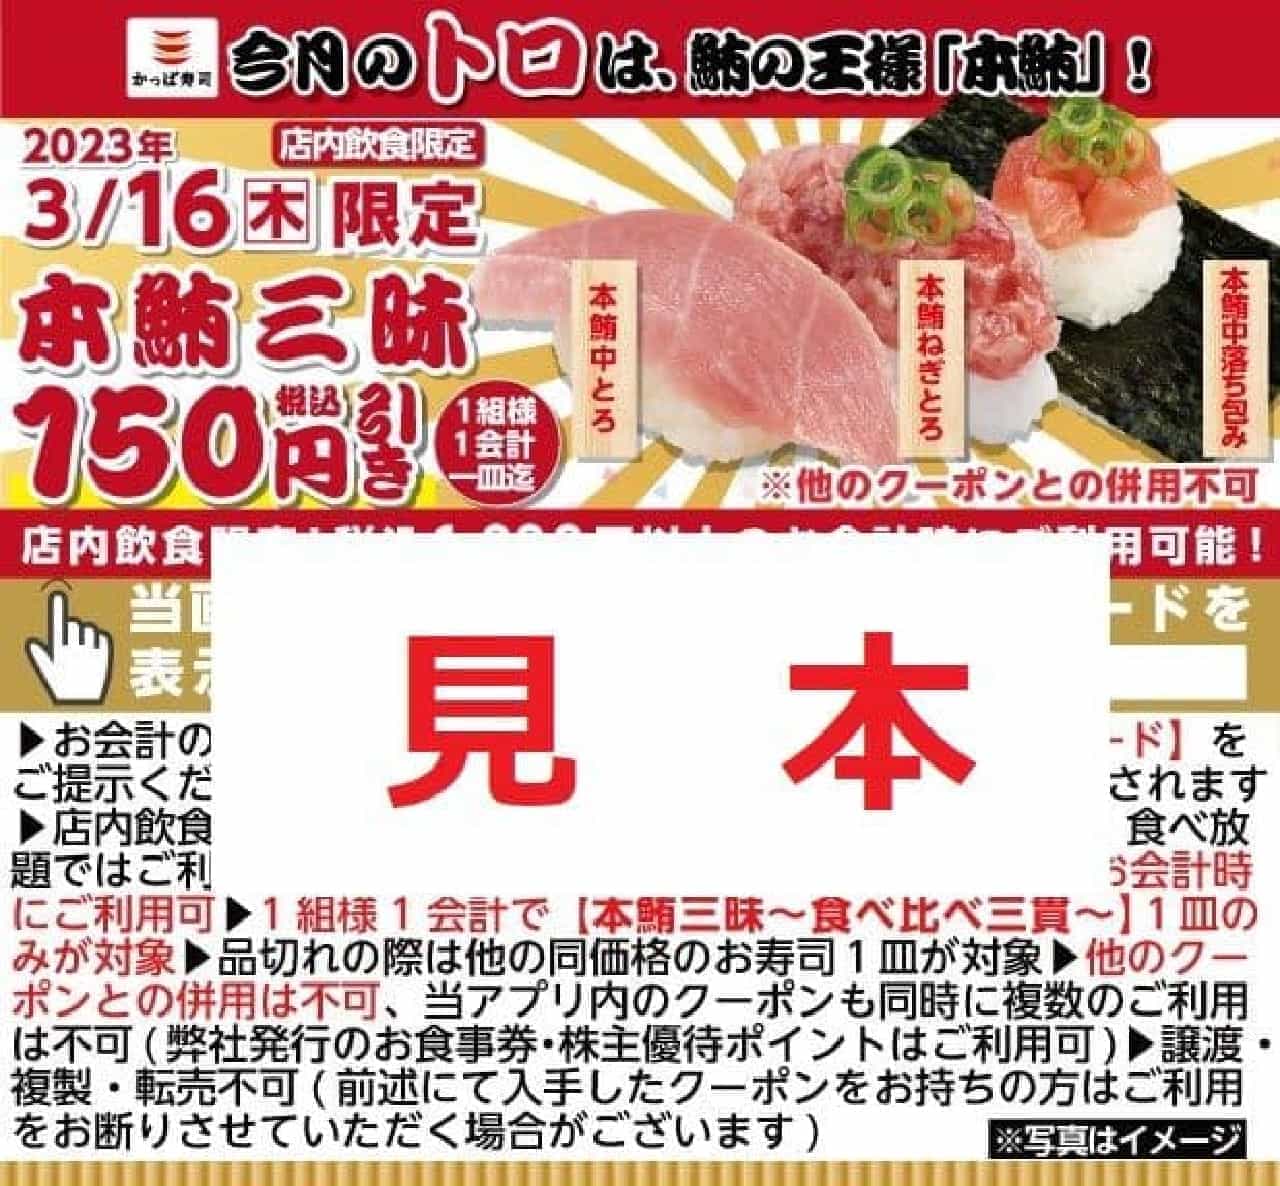 Kappa Sushi "Toro (16) Day" limited coupon